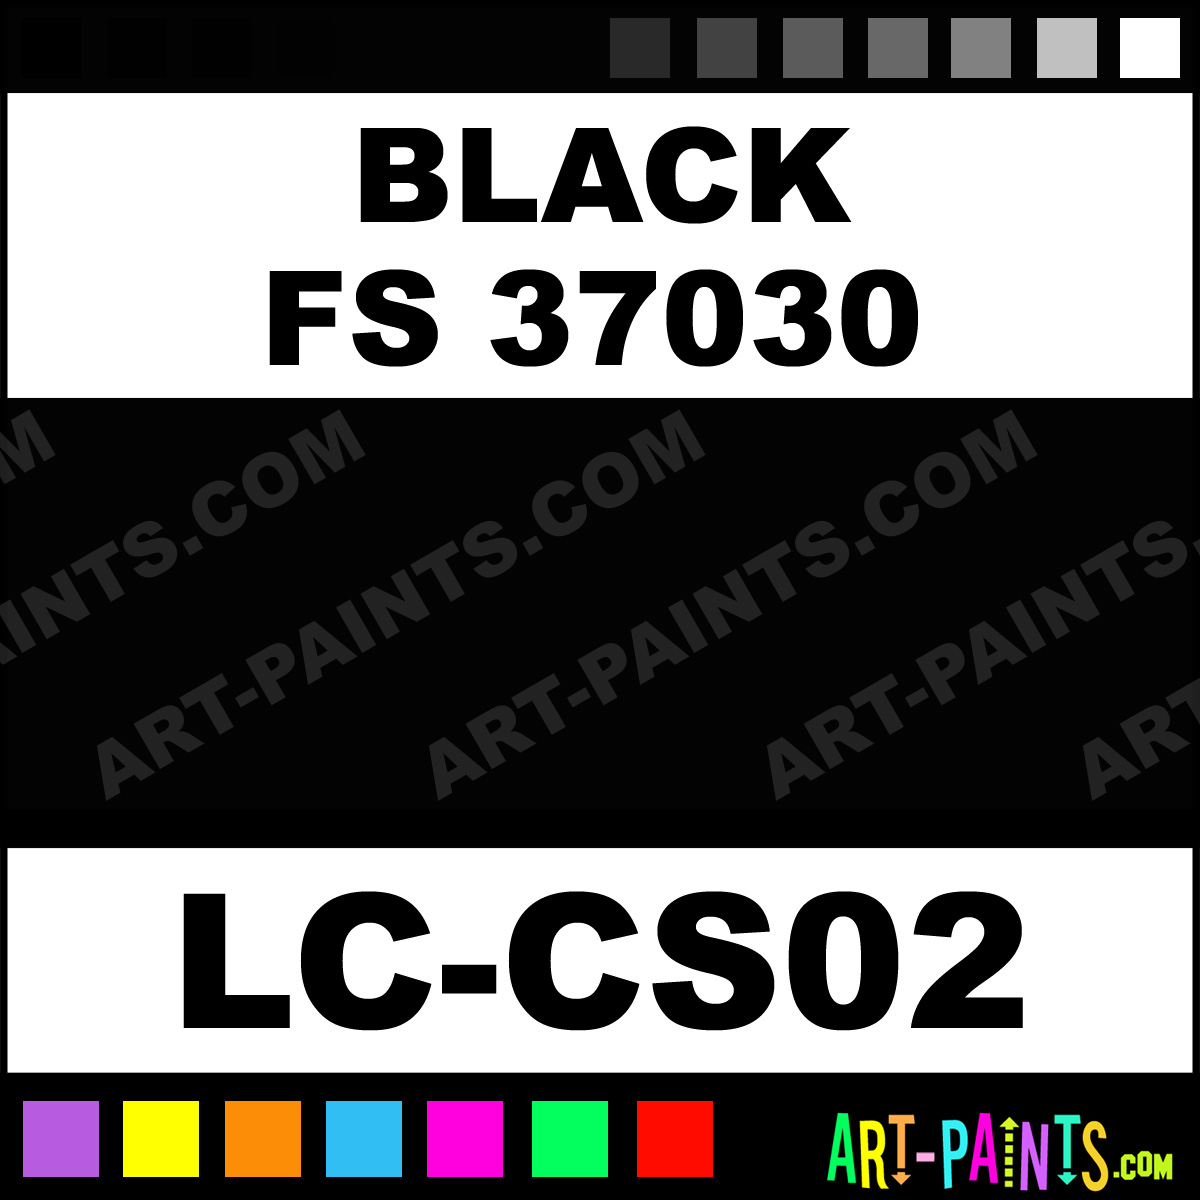 Black-FS-37030-lg.jpg